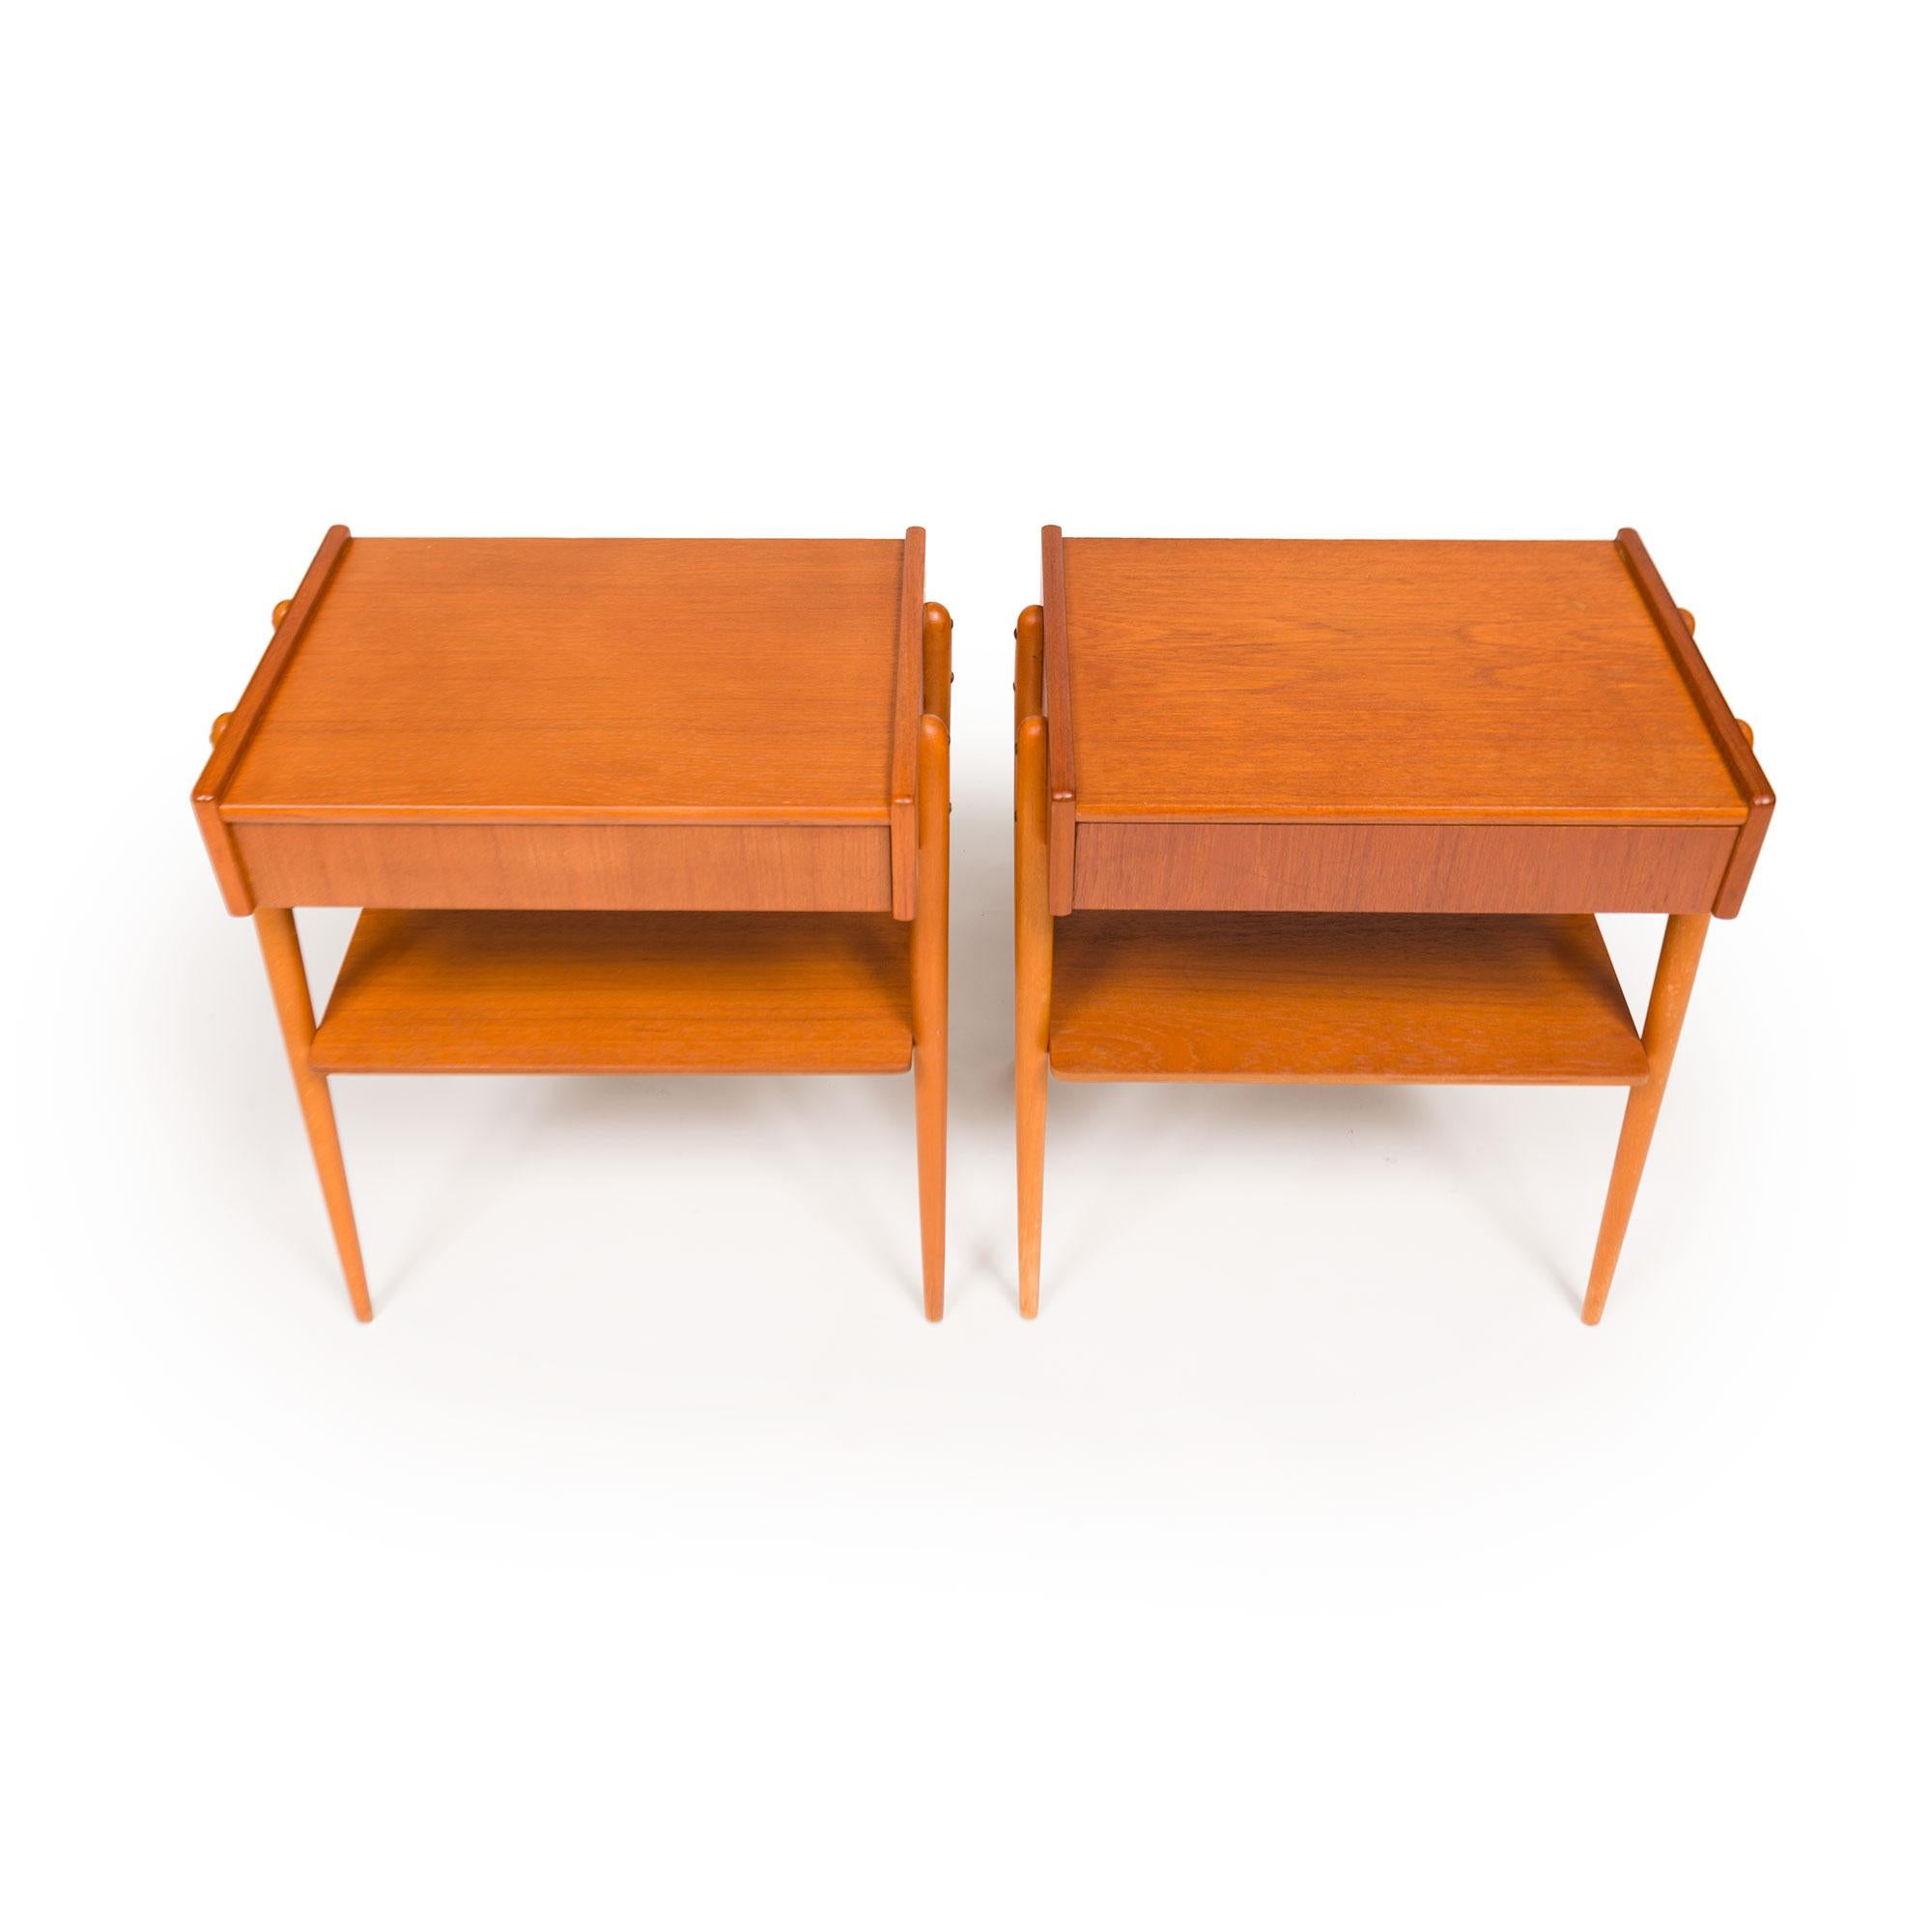 Vintage Danish Mid-Century Teak & Oak Nightstands Bedside Tables Pair In Good Condition For Sale In Emeryville, CA